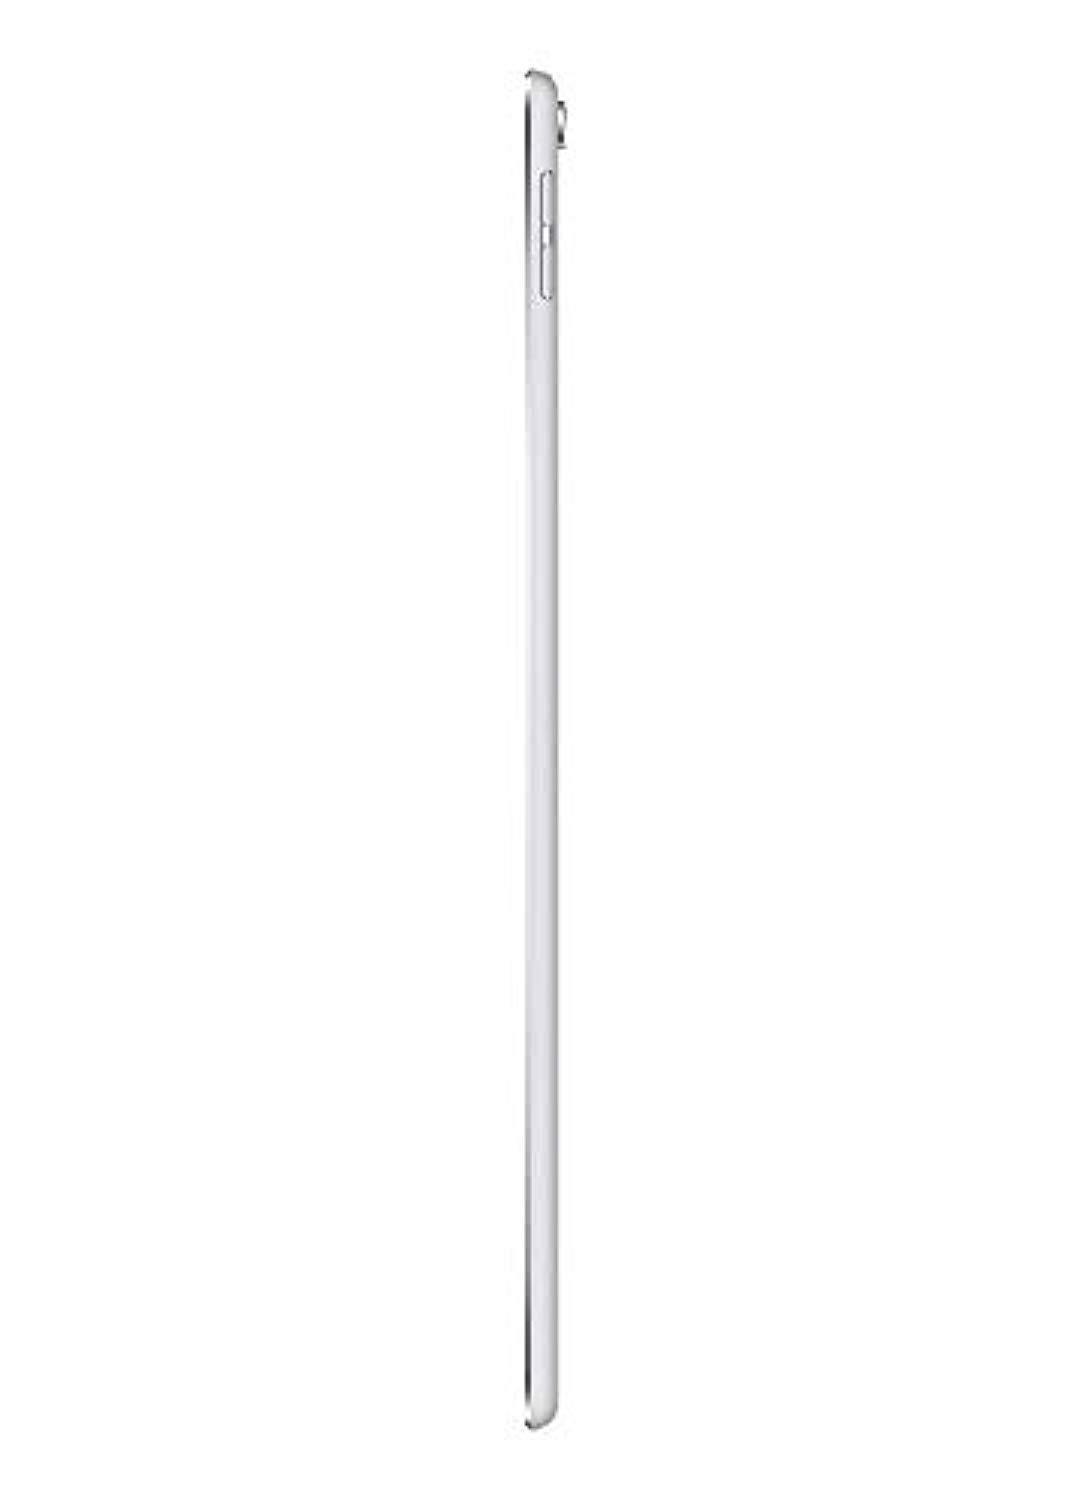 Apple iPad Pro (10.5-inch, Wi-Fi, 512 GB) - Silver - Offer Games